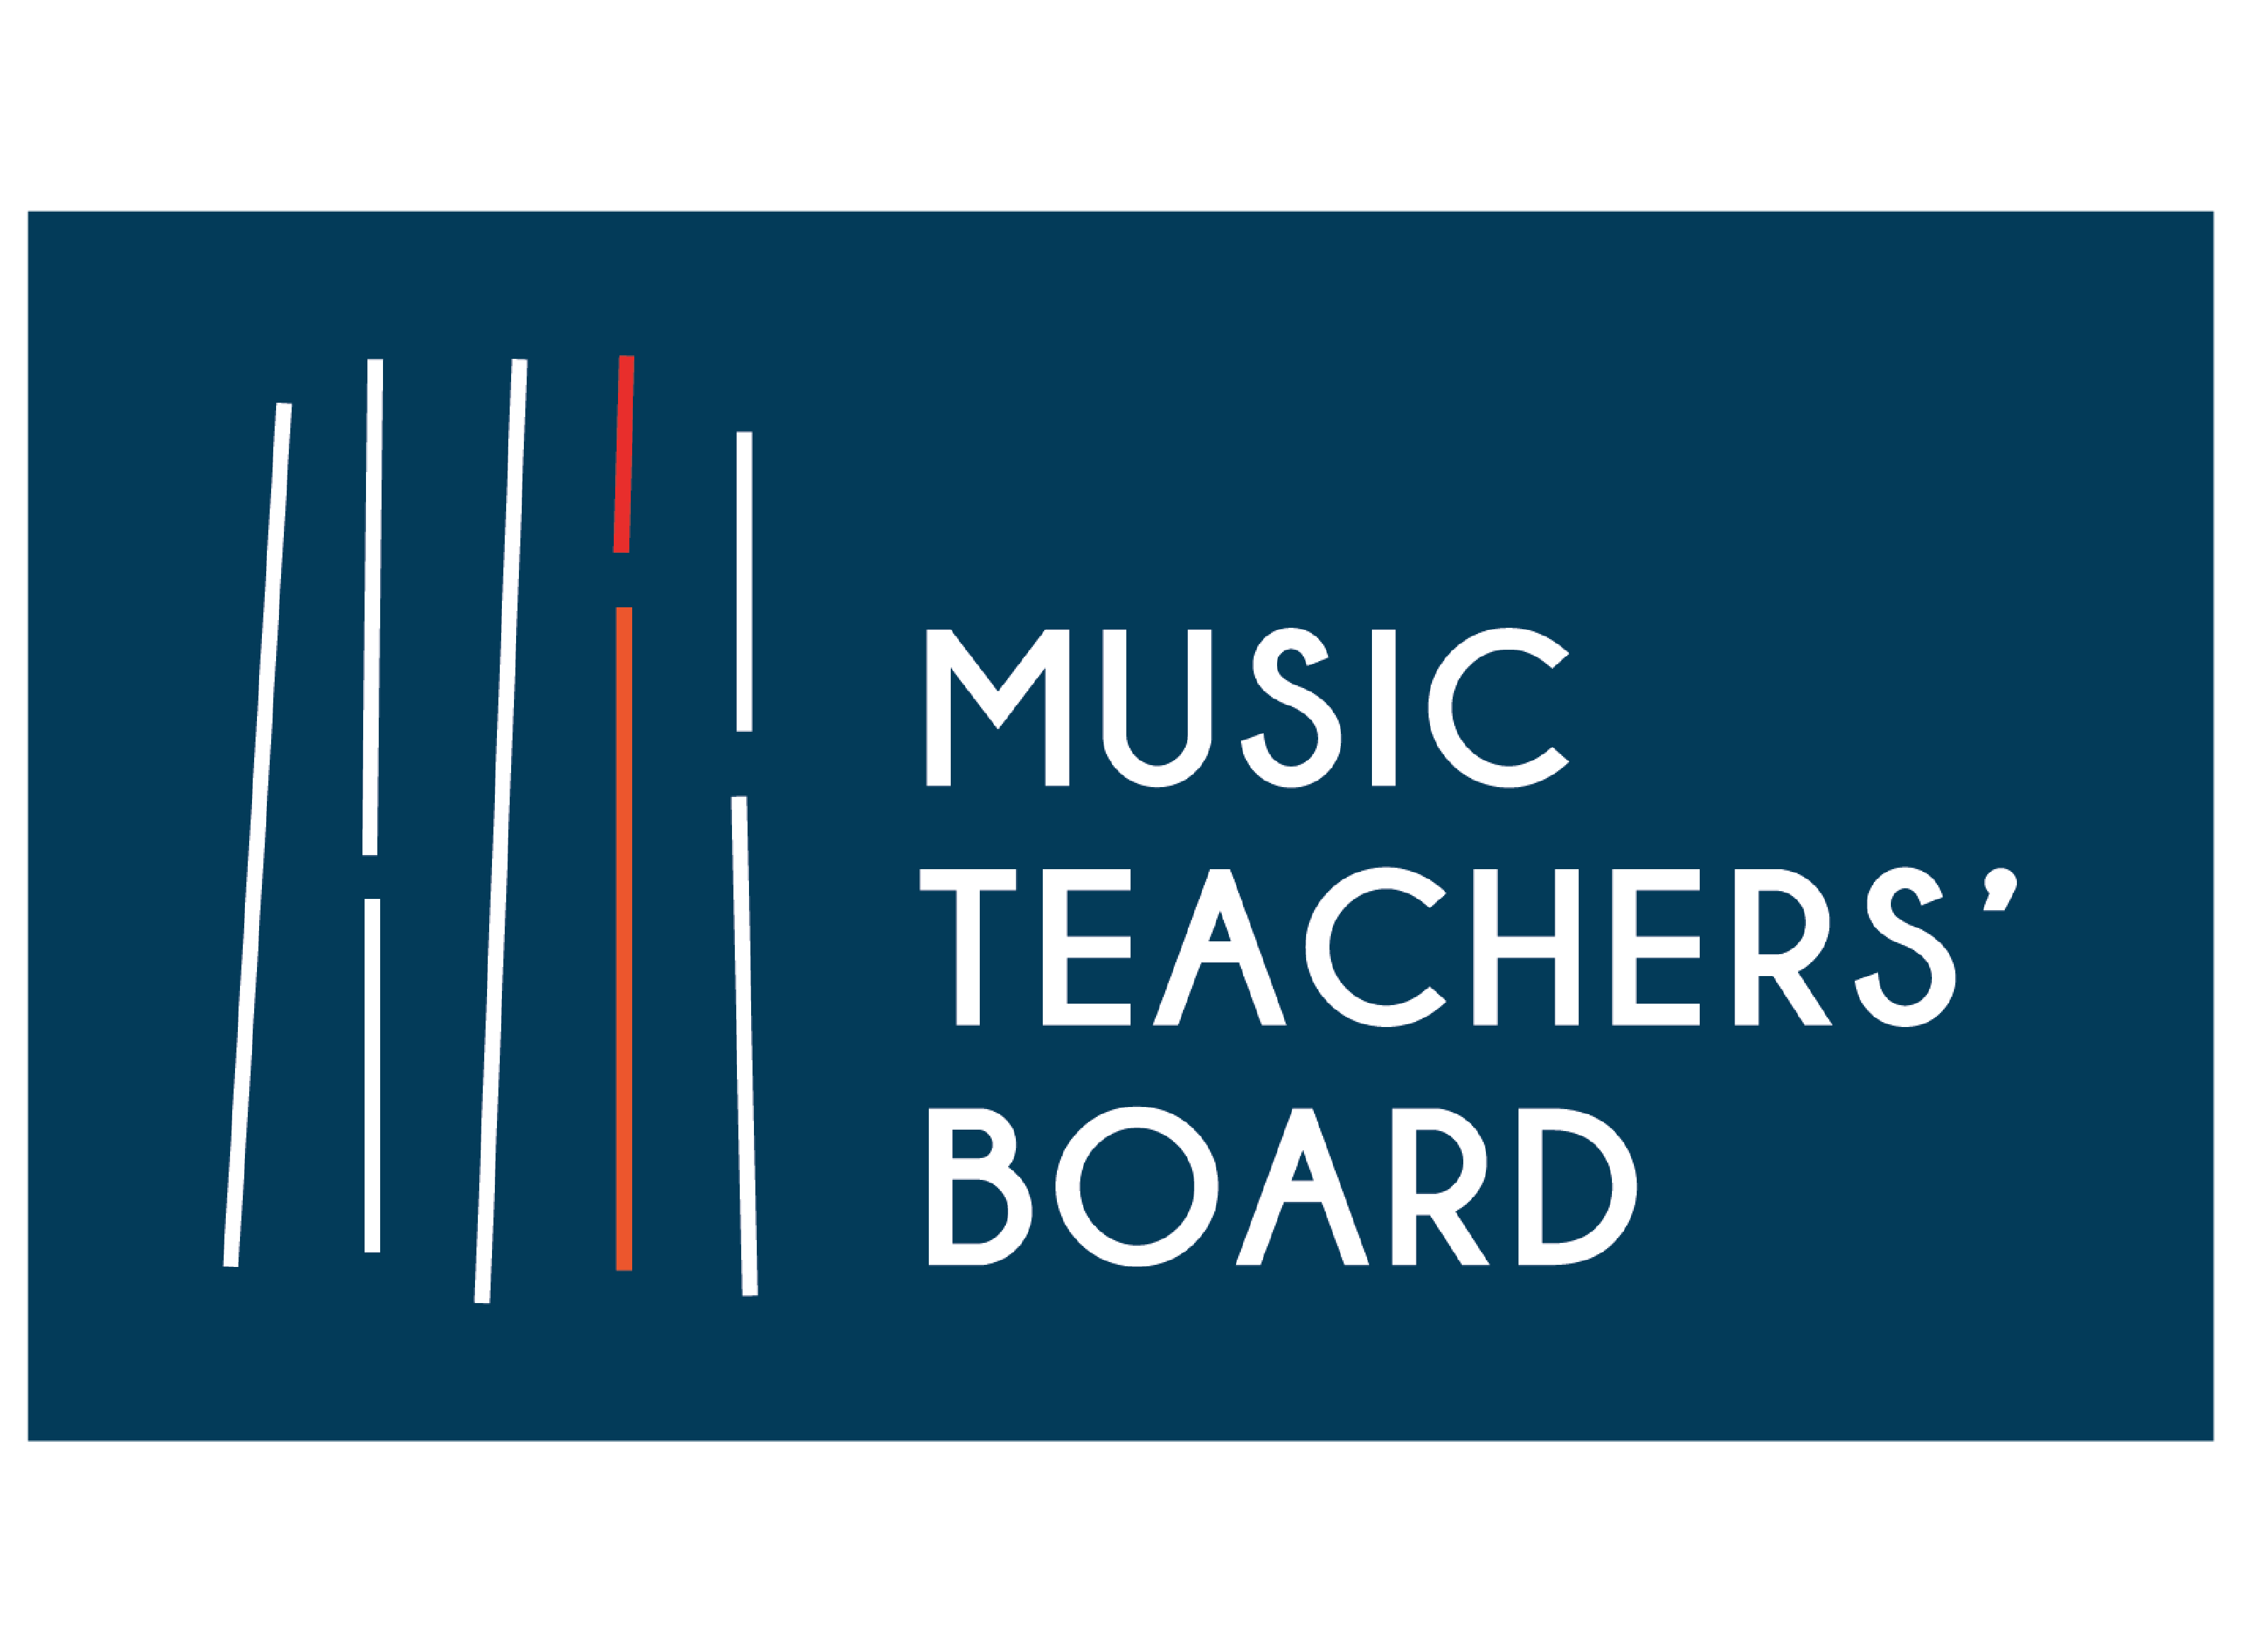 MTB (Music Teacher’s Board)